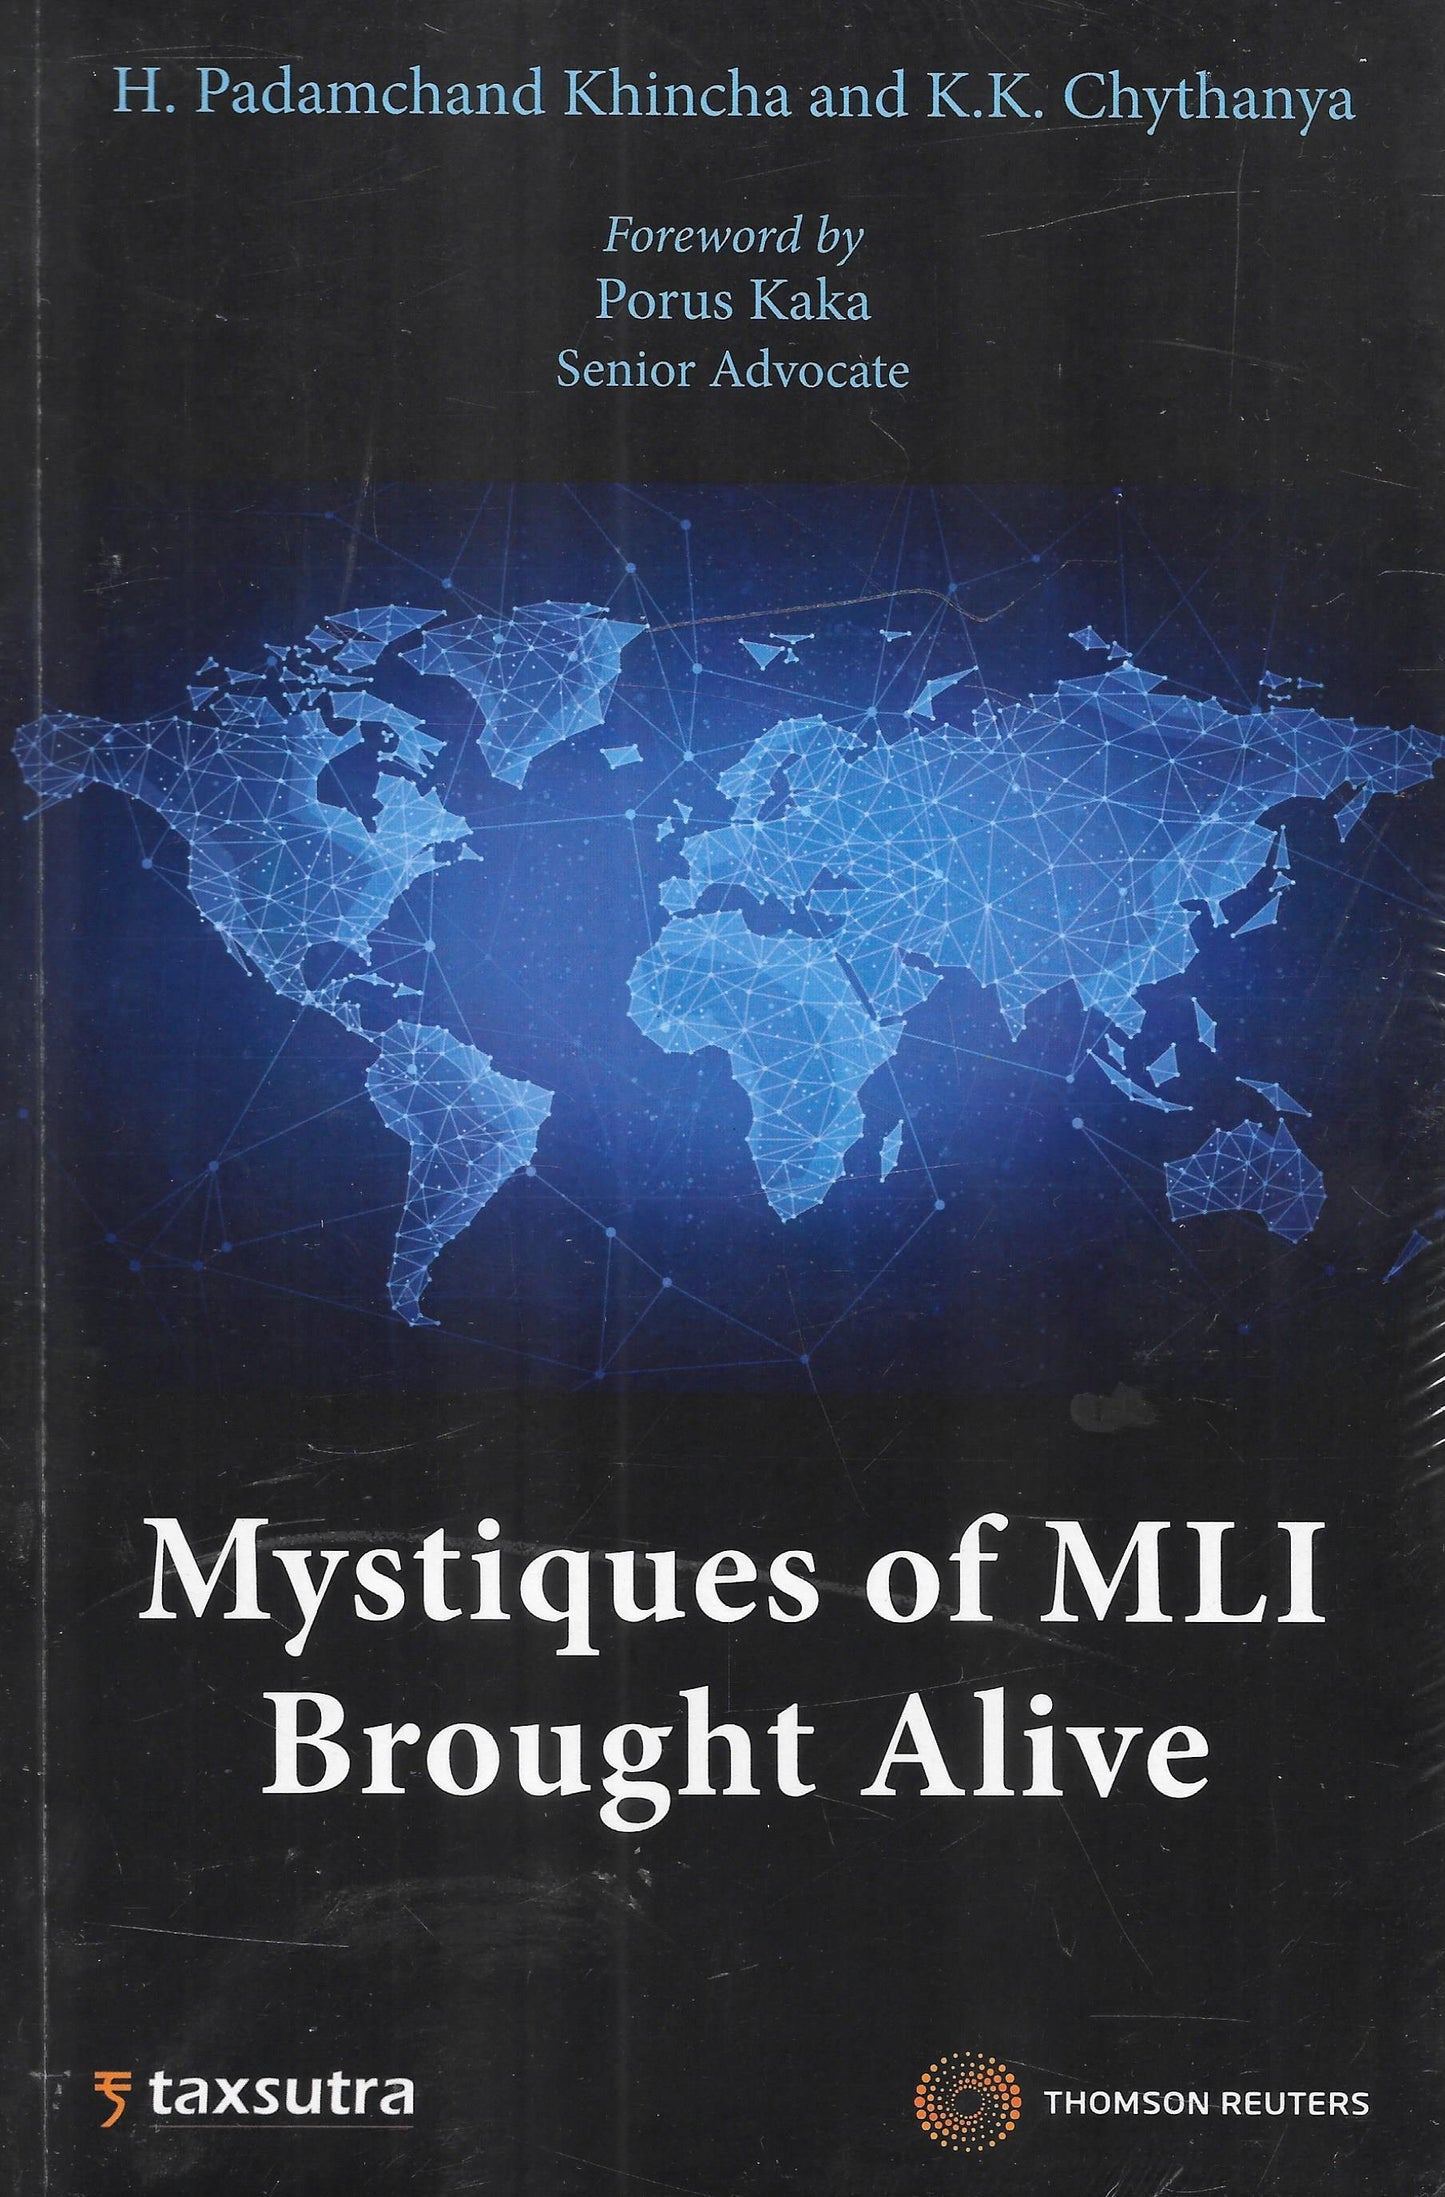 Mystiques of MLI brought Alive